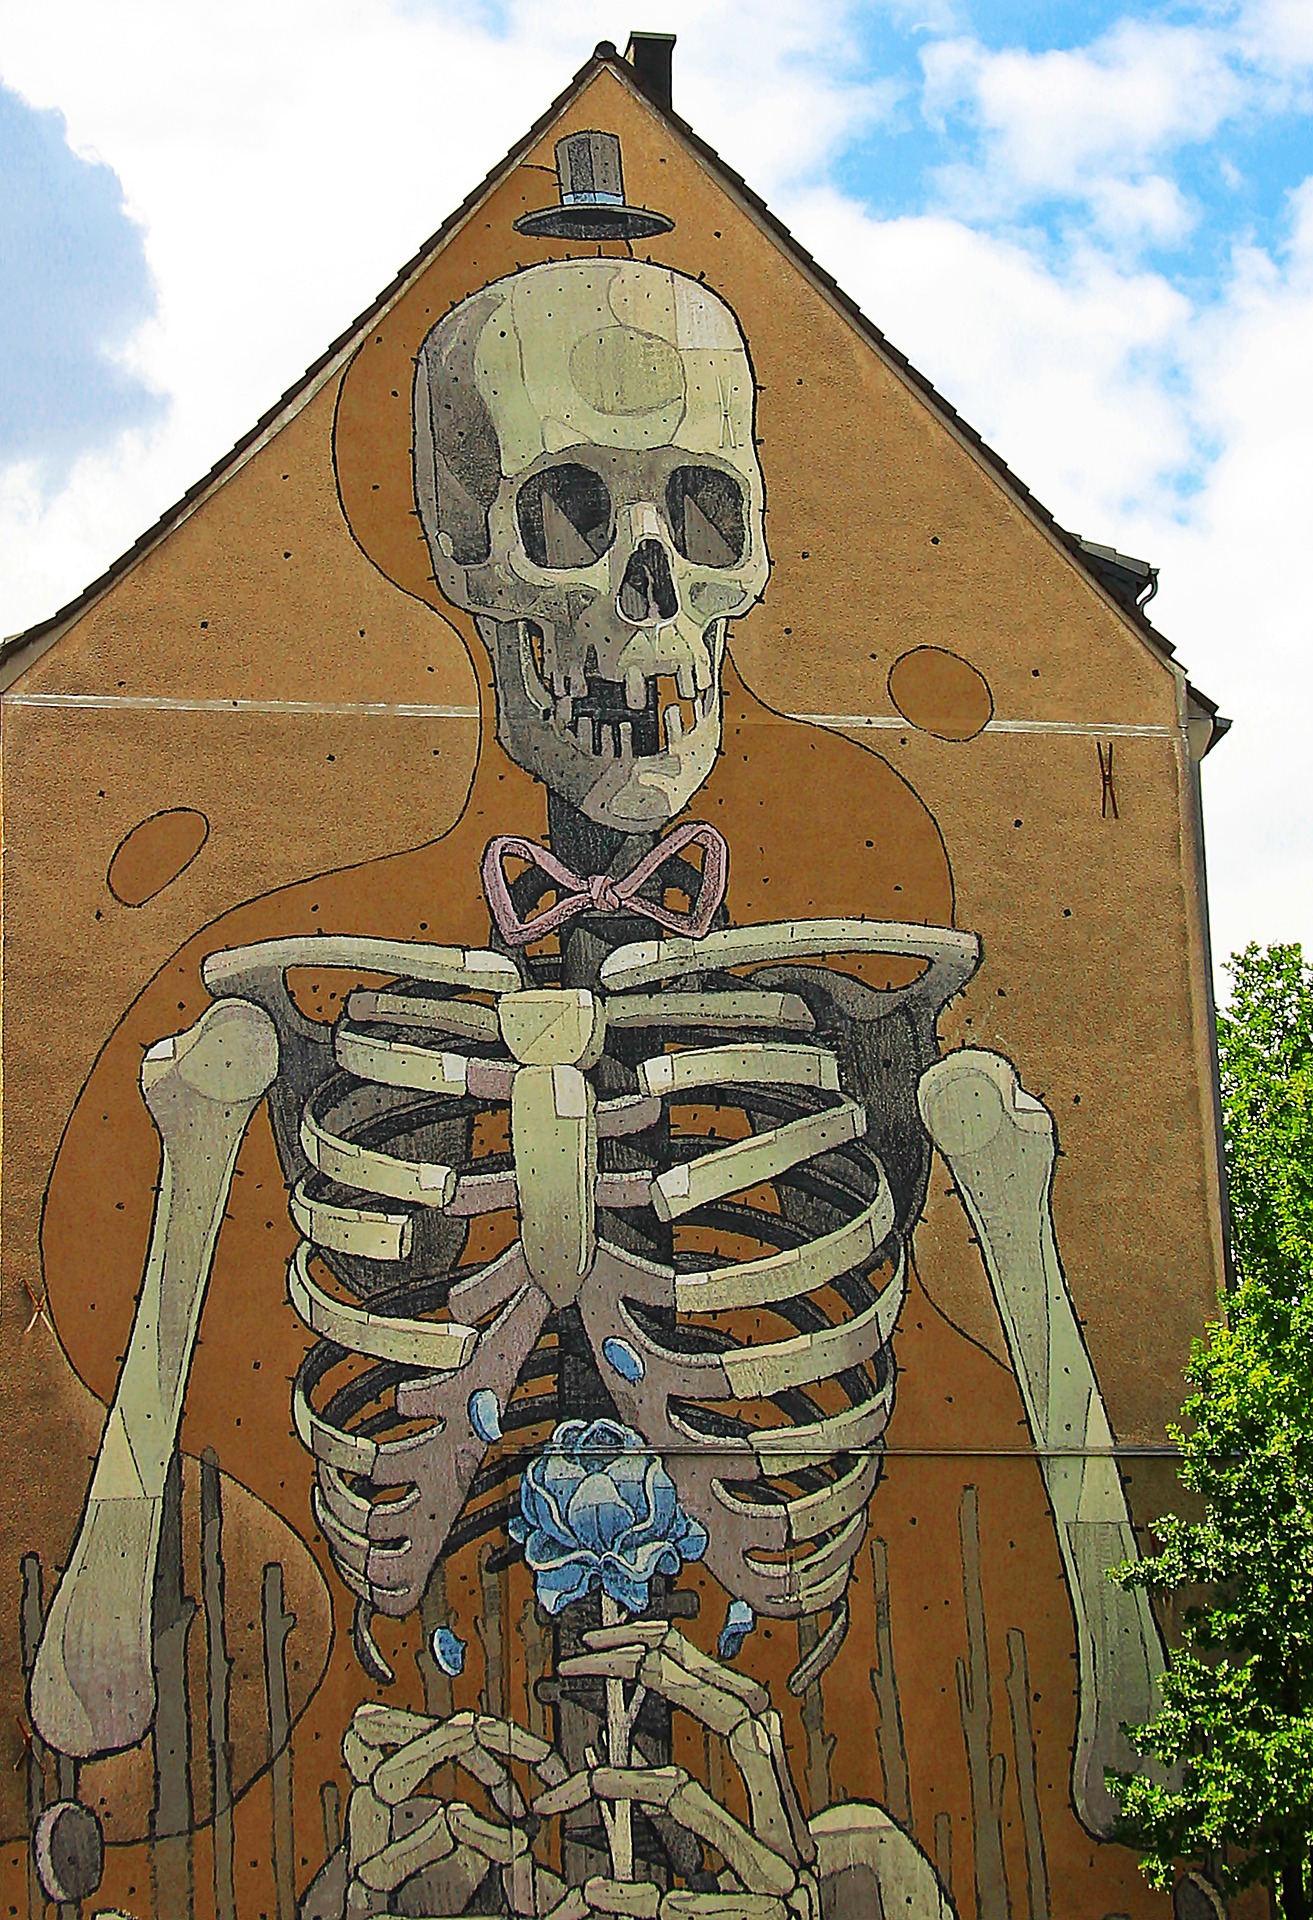 Painted Skeleton Wall, Bones, Construction, Ghetto, Graffiti, HQ Photo